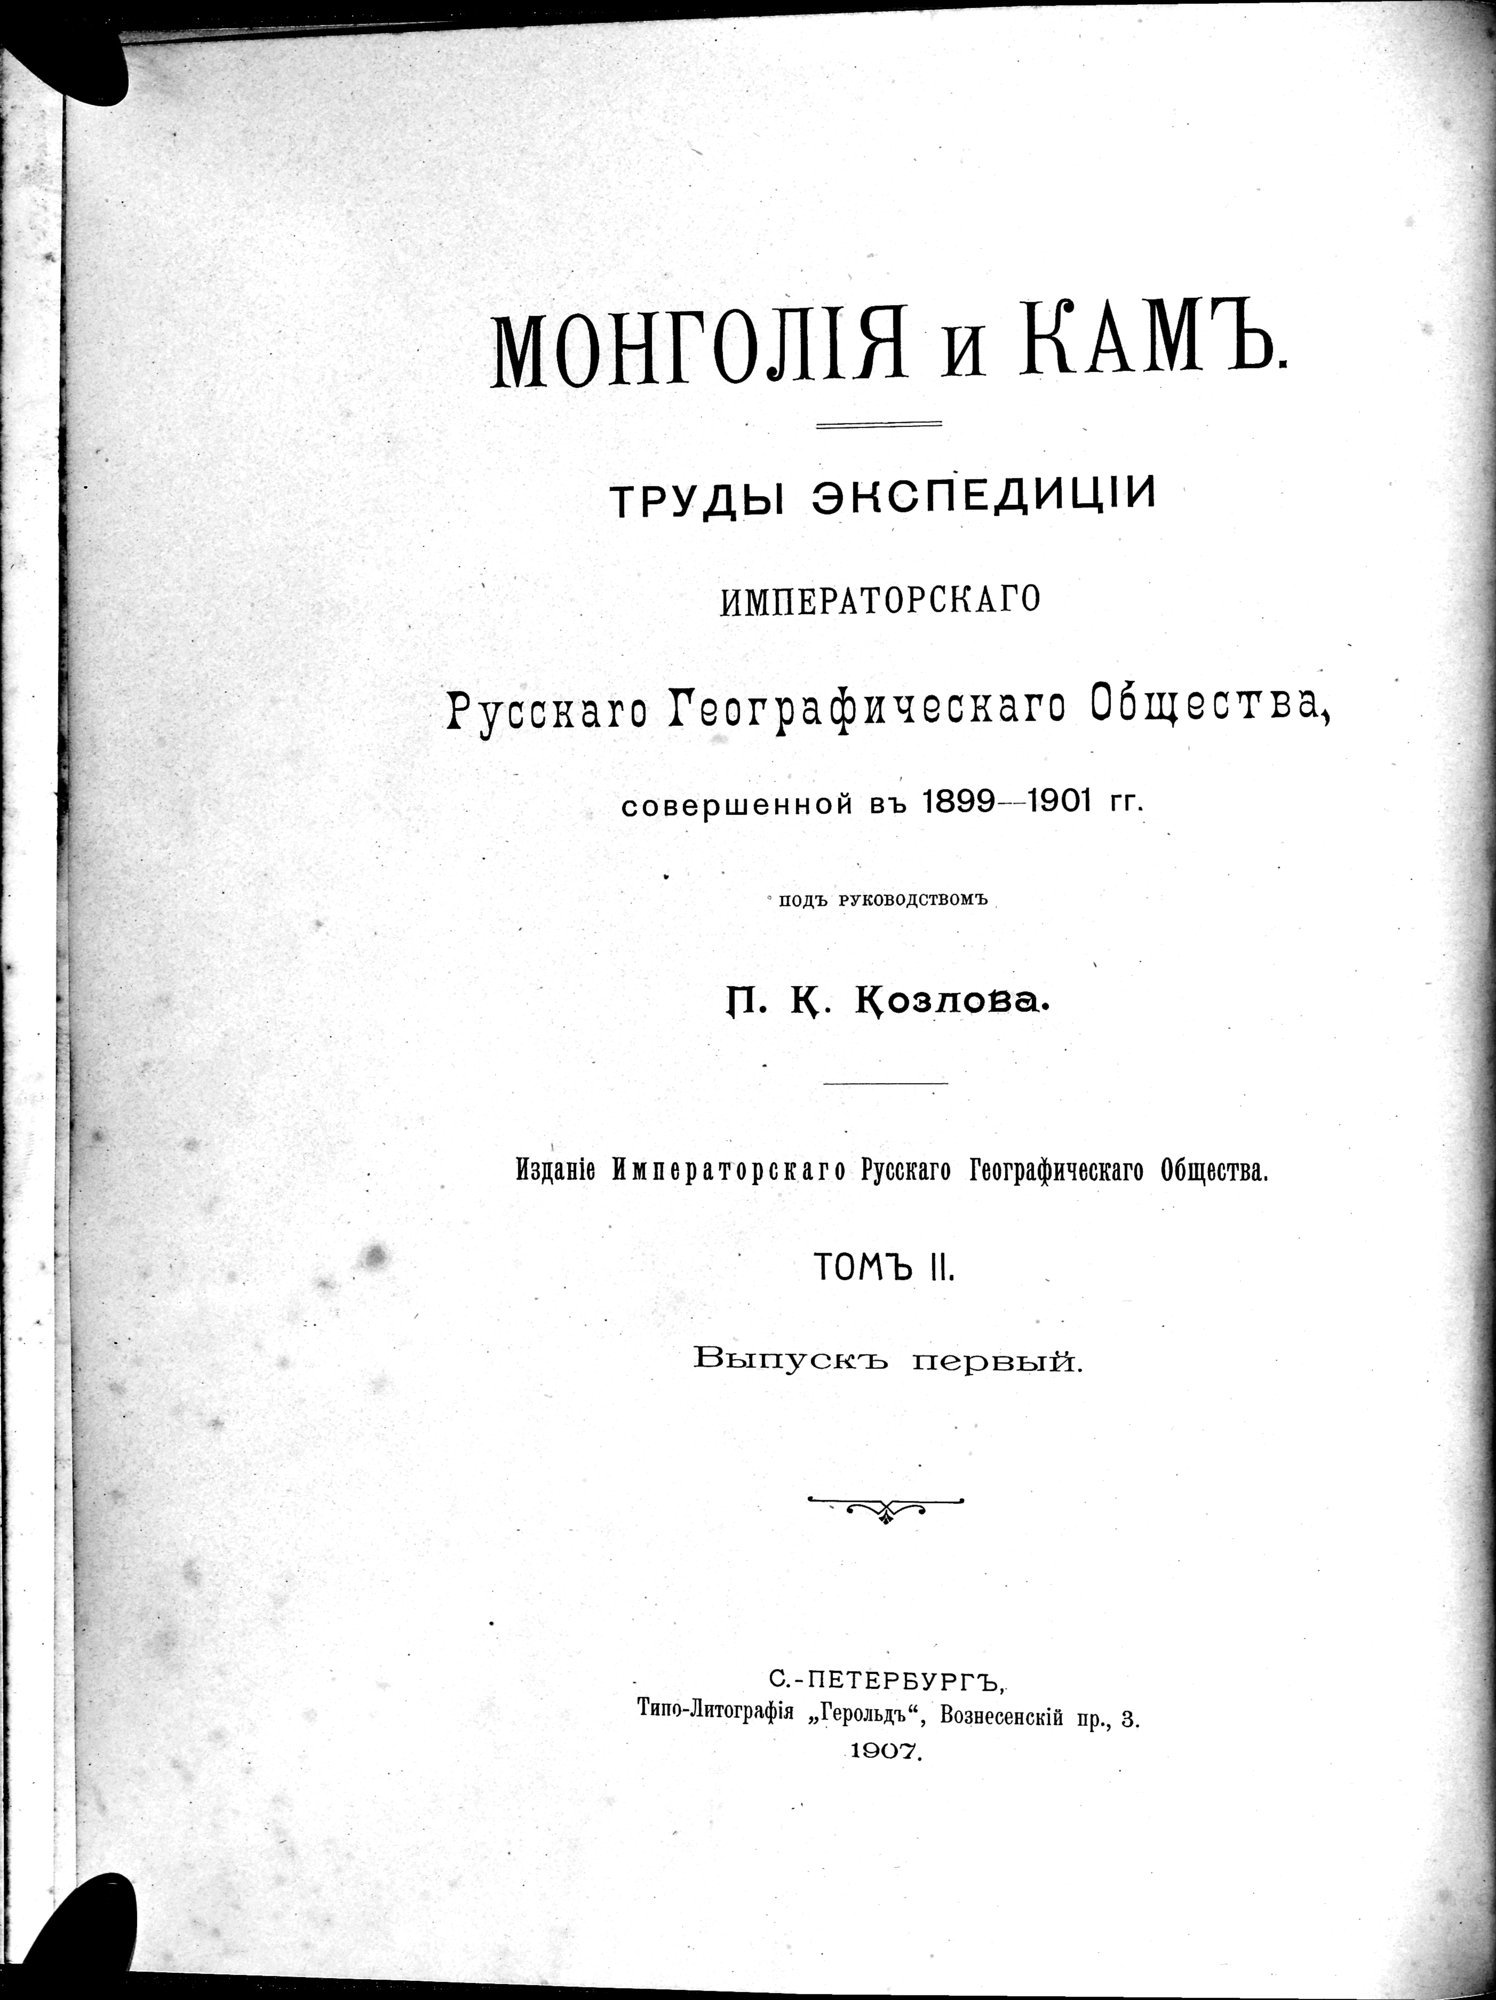 Mongoliia i Kam : vol.3 / Page 10 (Grayscale High Resolution Image)